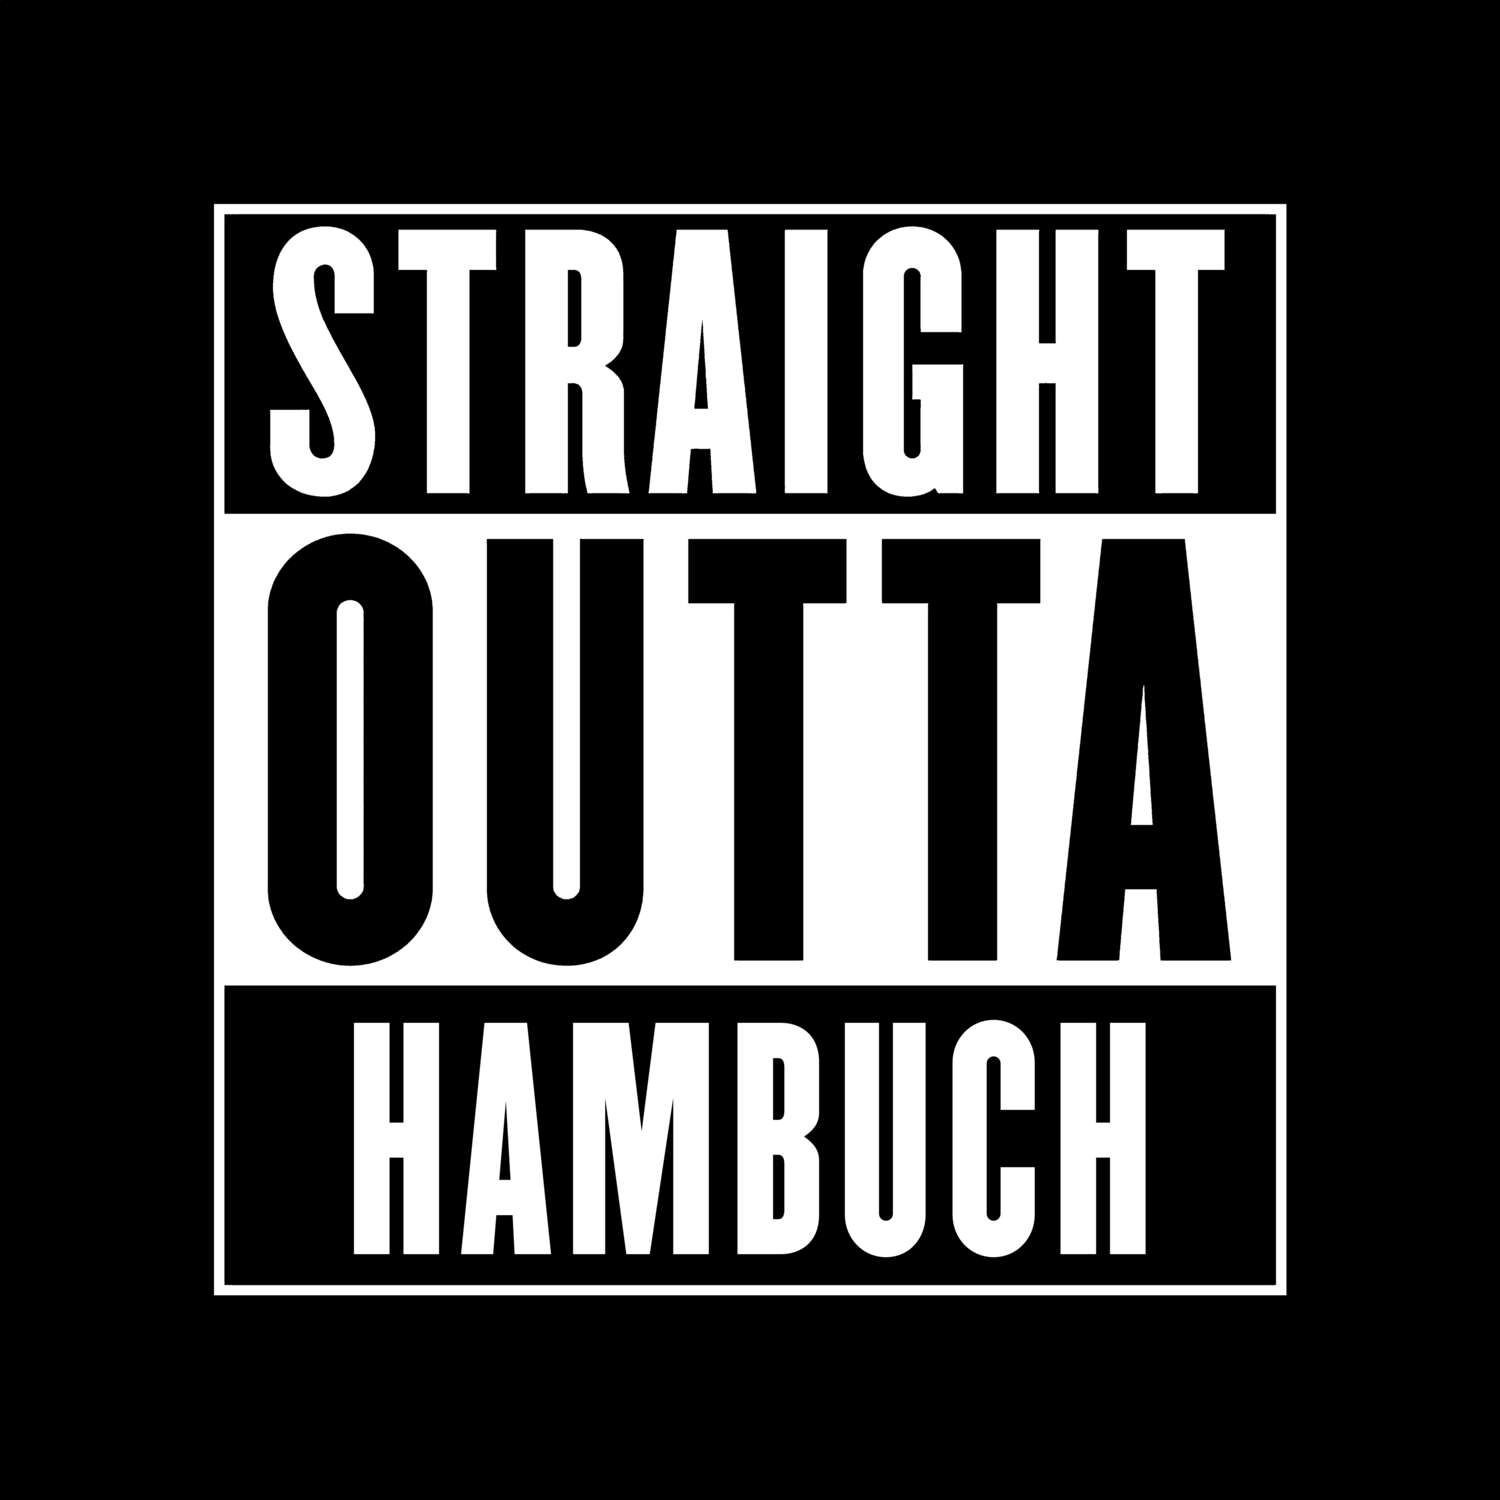 Hambuch T-Shirt »Straight Outta«